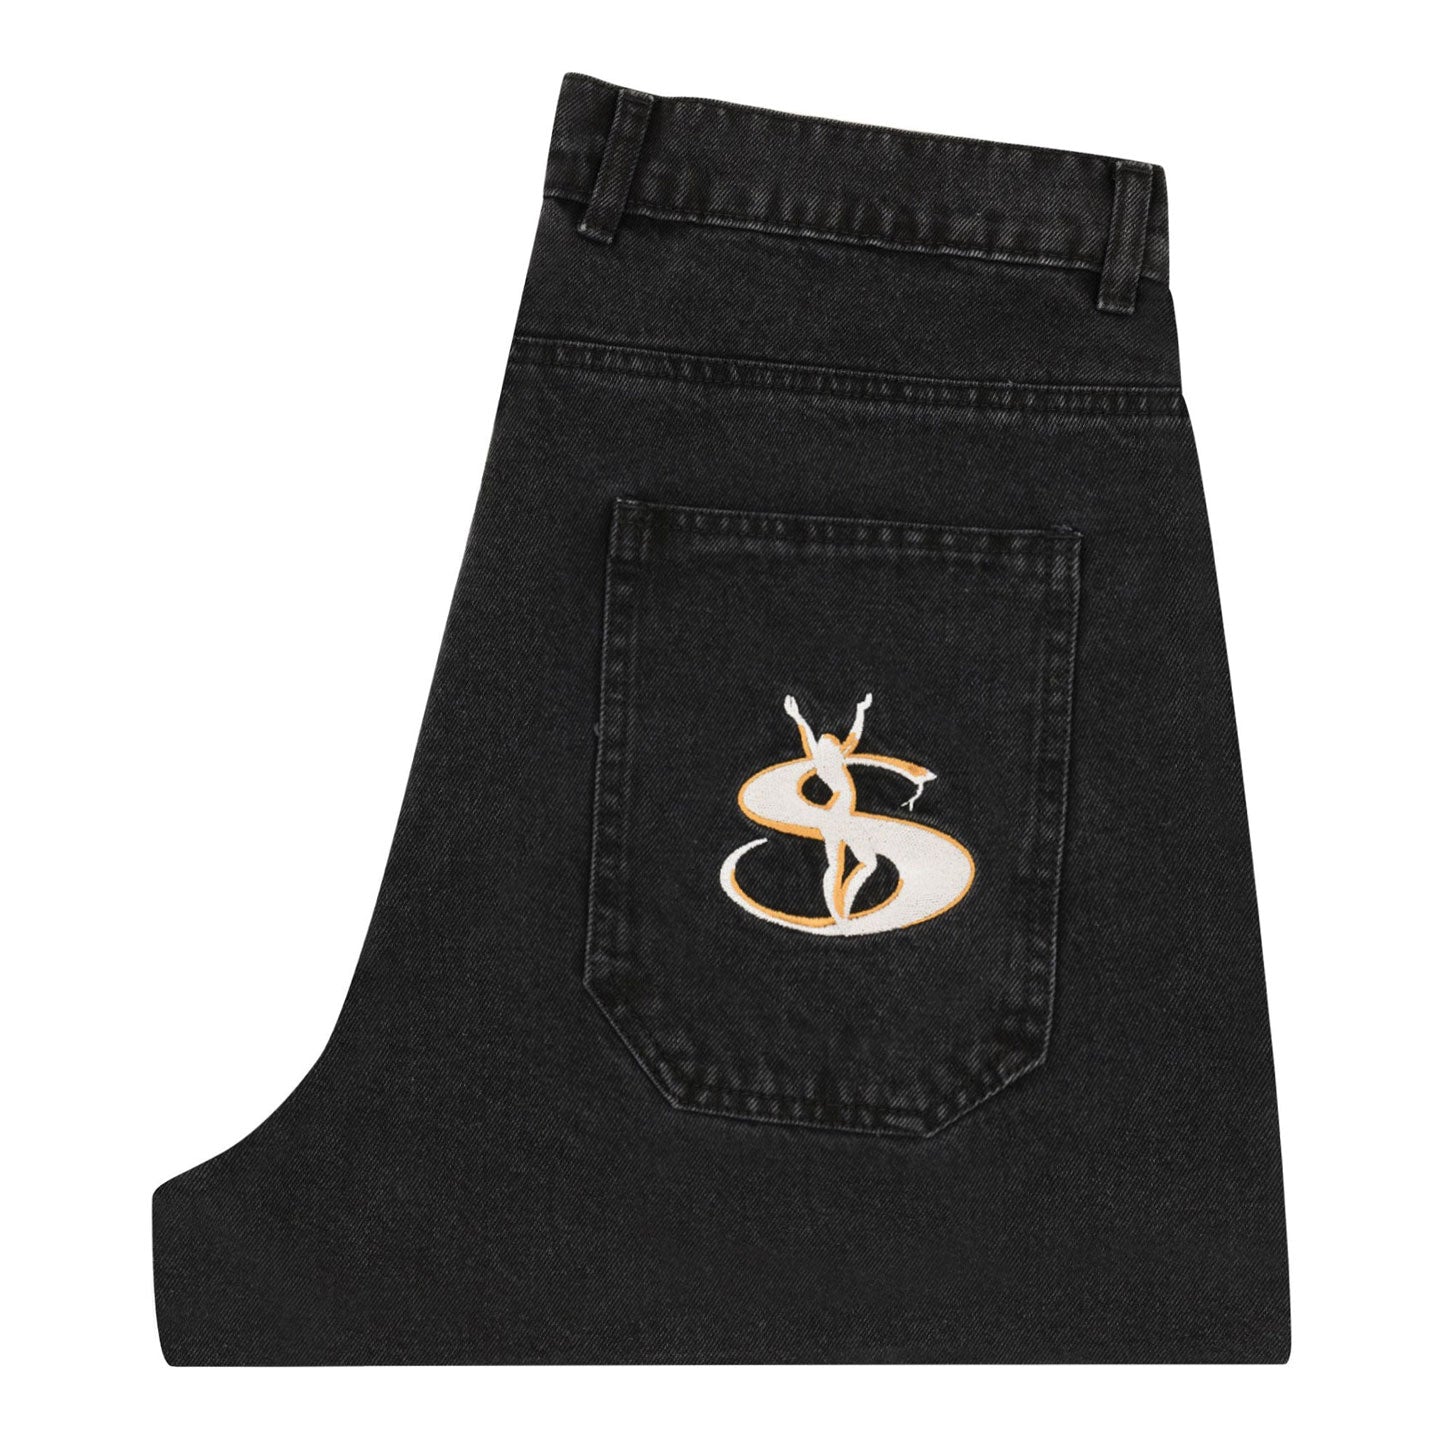 Yardsale Phantasy Jeans black supreme大人気のデニムです